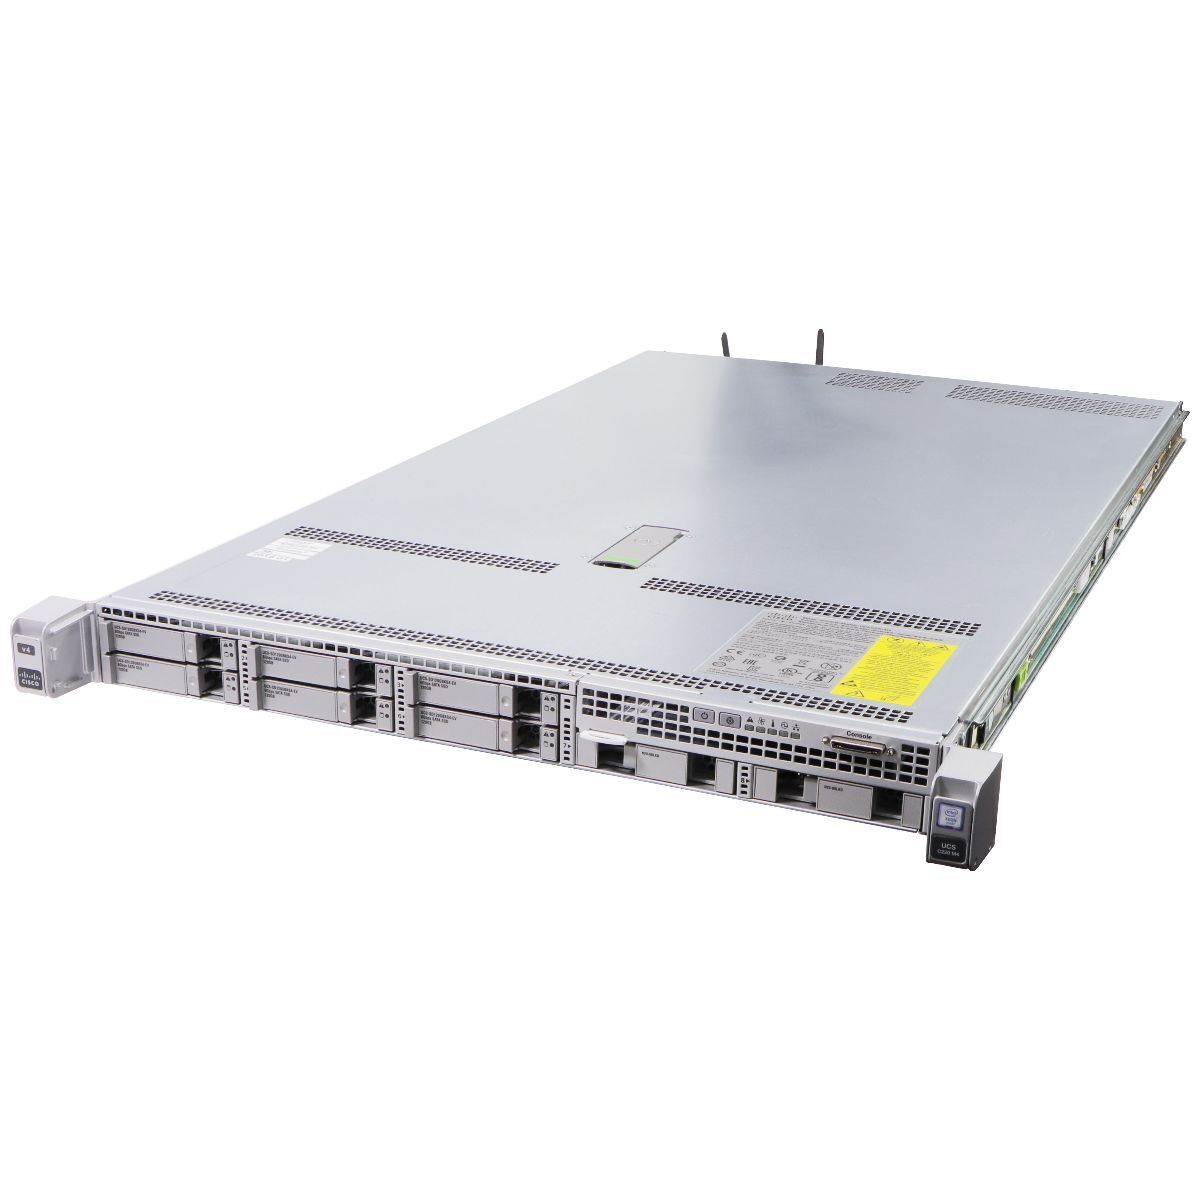 Cisco UCS C220 M4 Rack Server - Xeon E5-2620 v4/6 x 120GB SSD/64GB RAM/Serv 2016